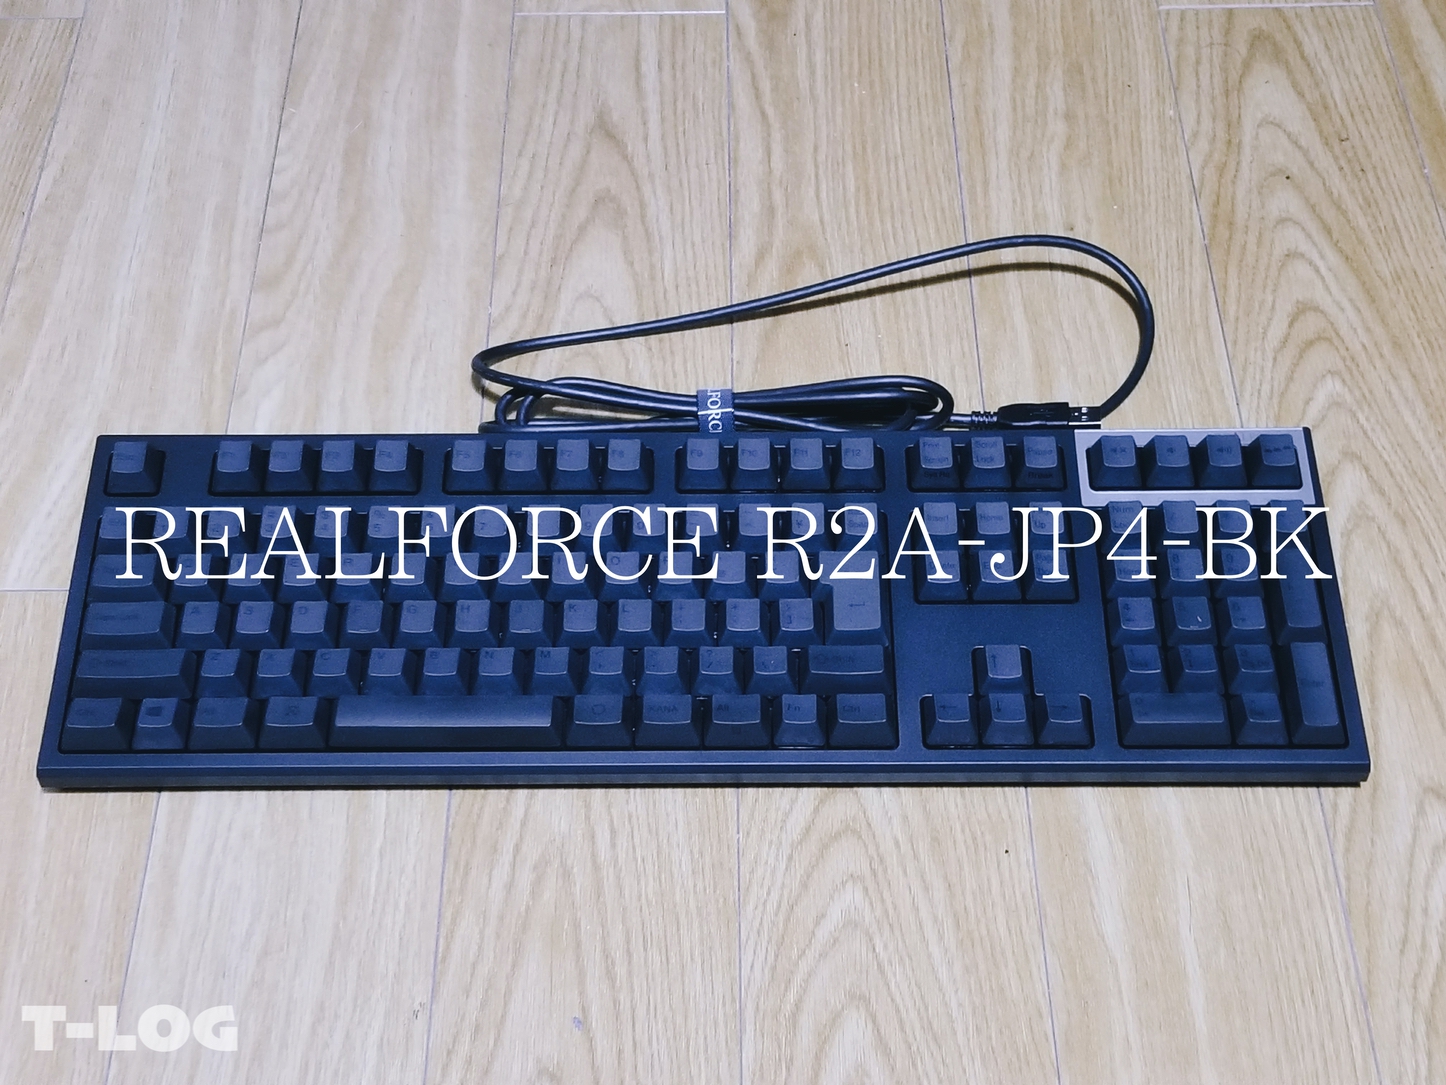 Hhkbに並ぶ王道のキーボード Realforce R2a Jp4 Bk使用レビュー T Log